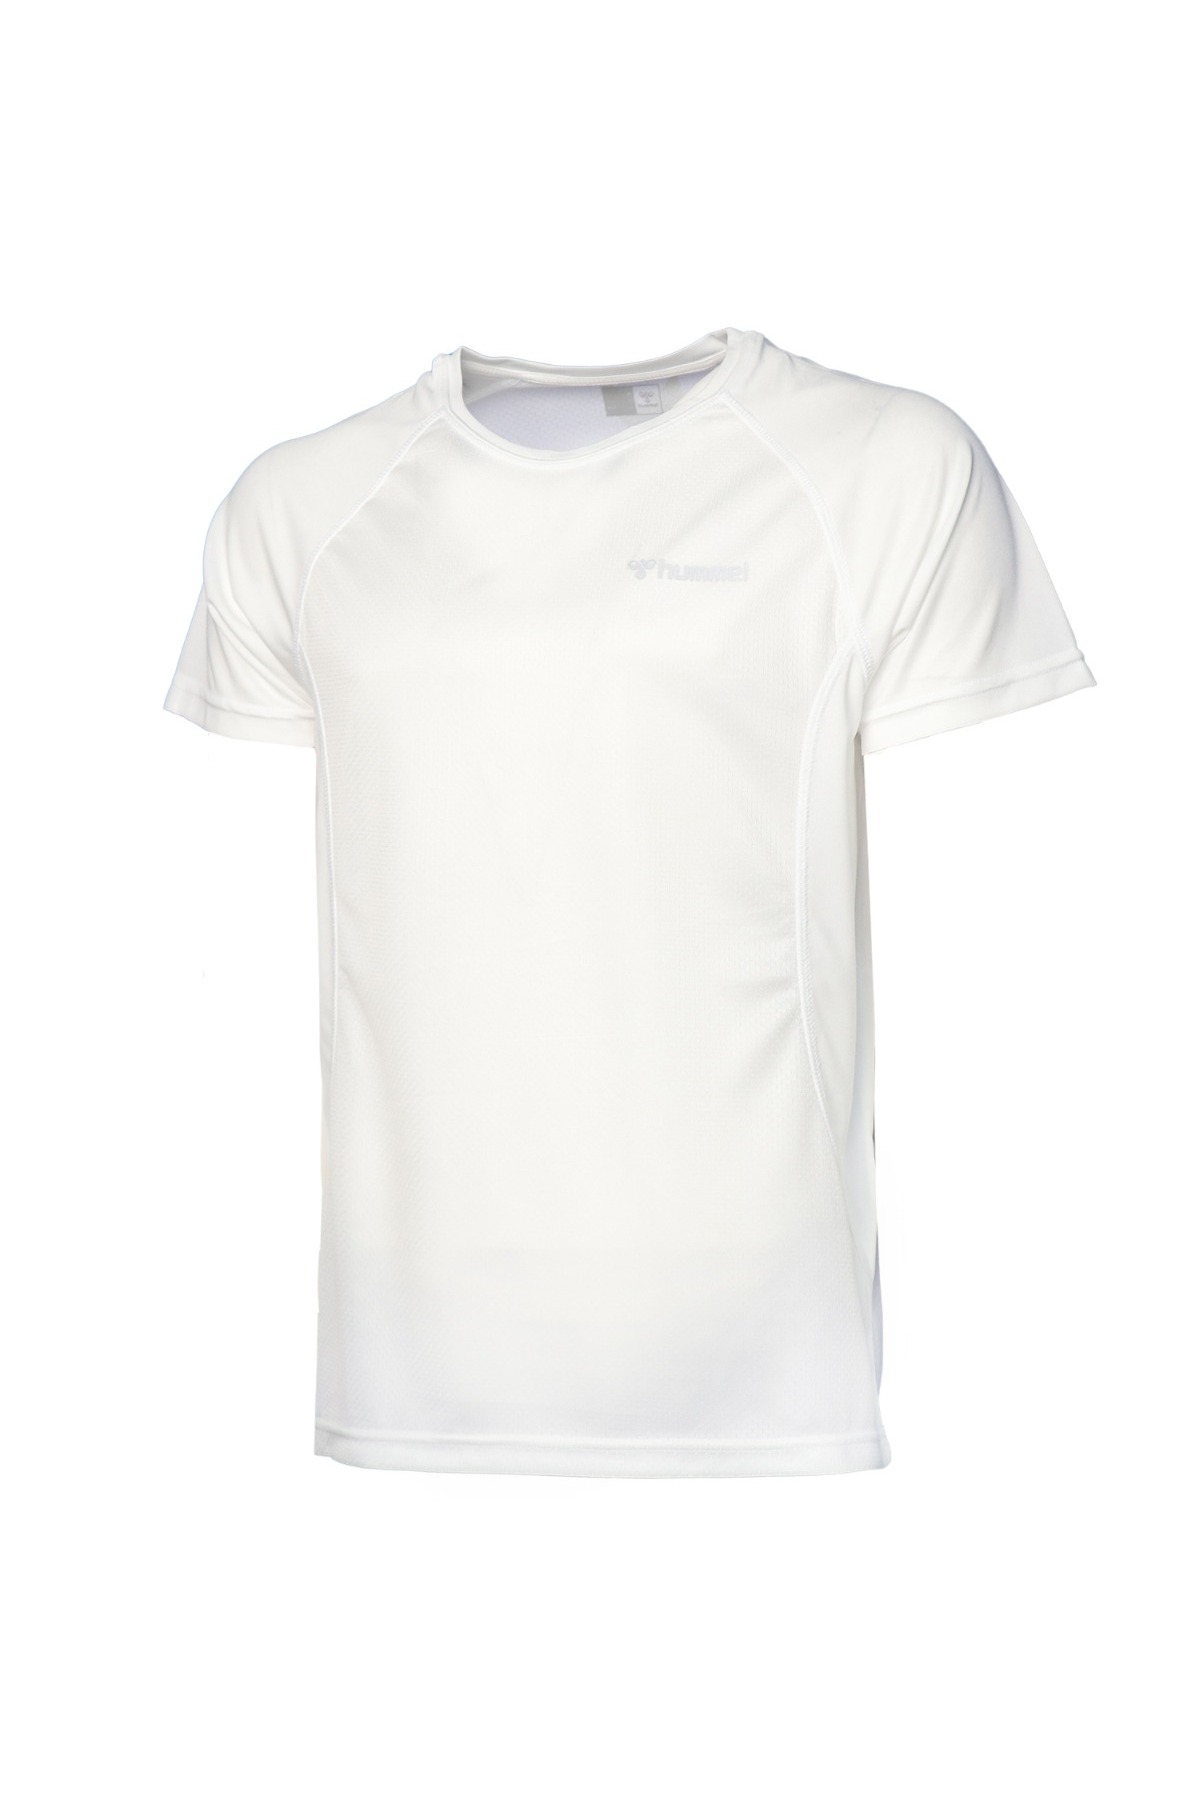 HUMMEL تی شرت یقه خدمه سفید مردانه Juan